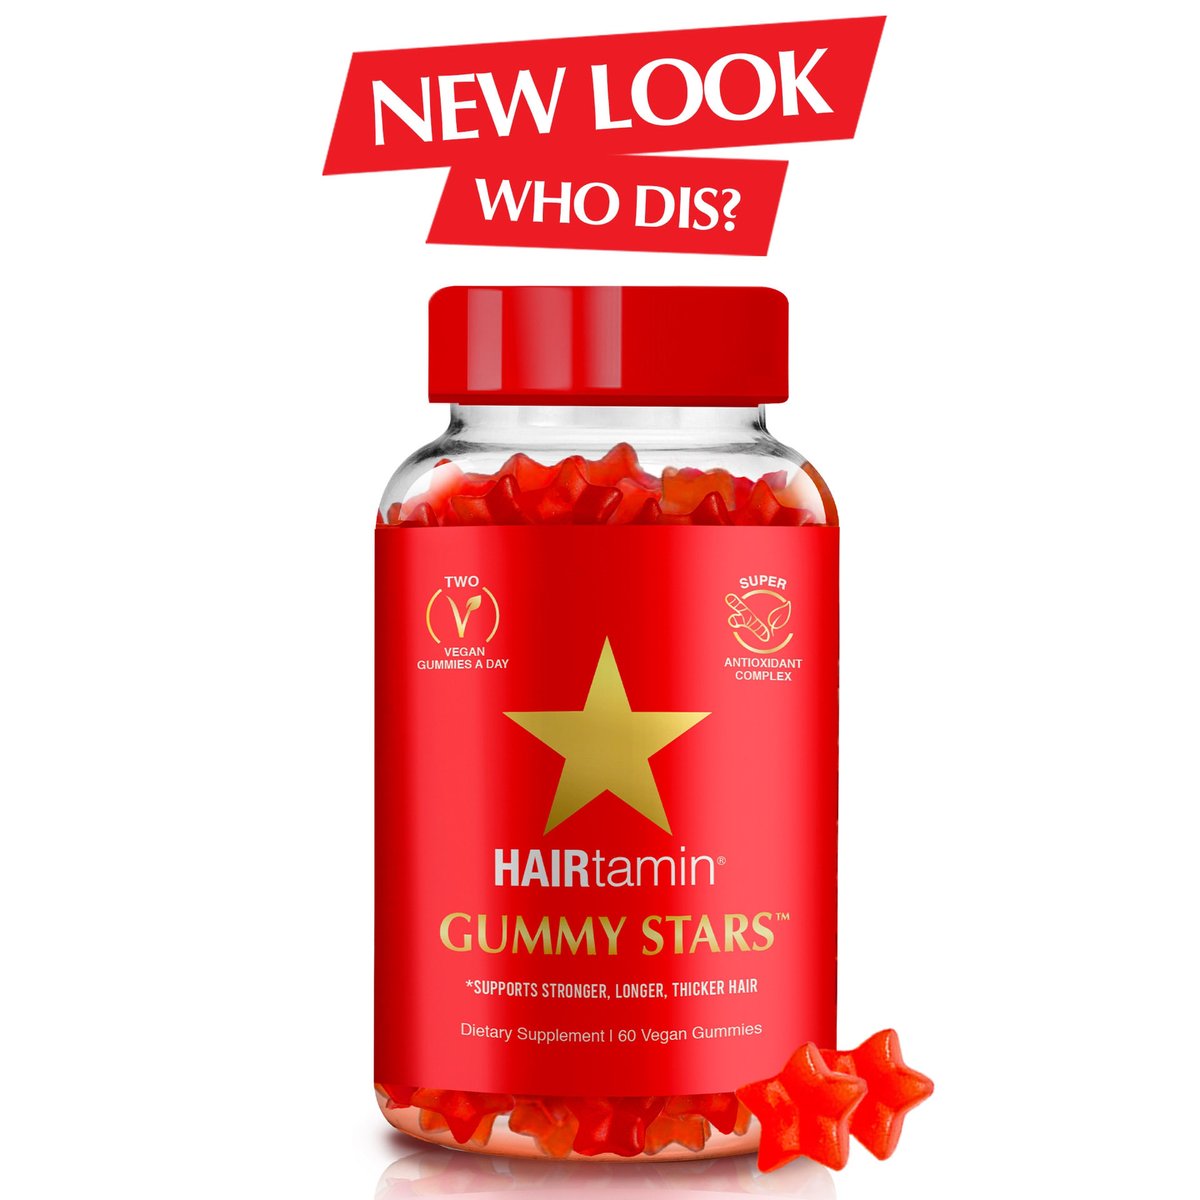 hairtamin-gummy-stars